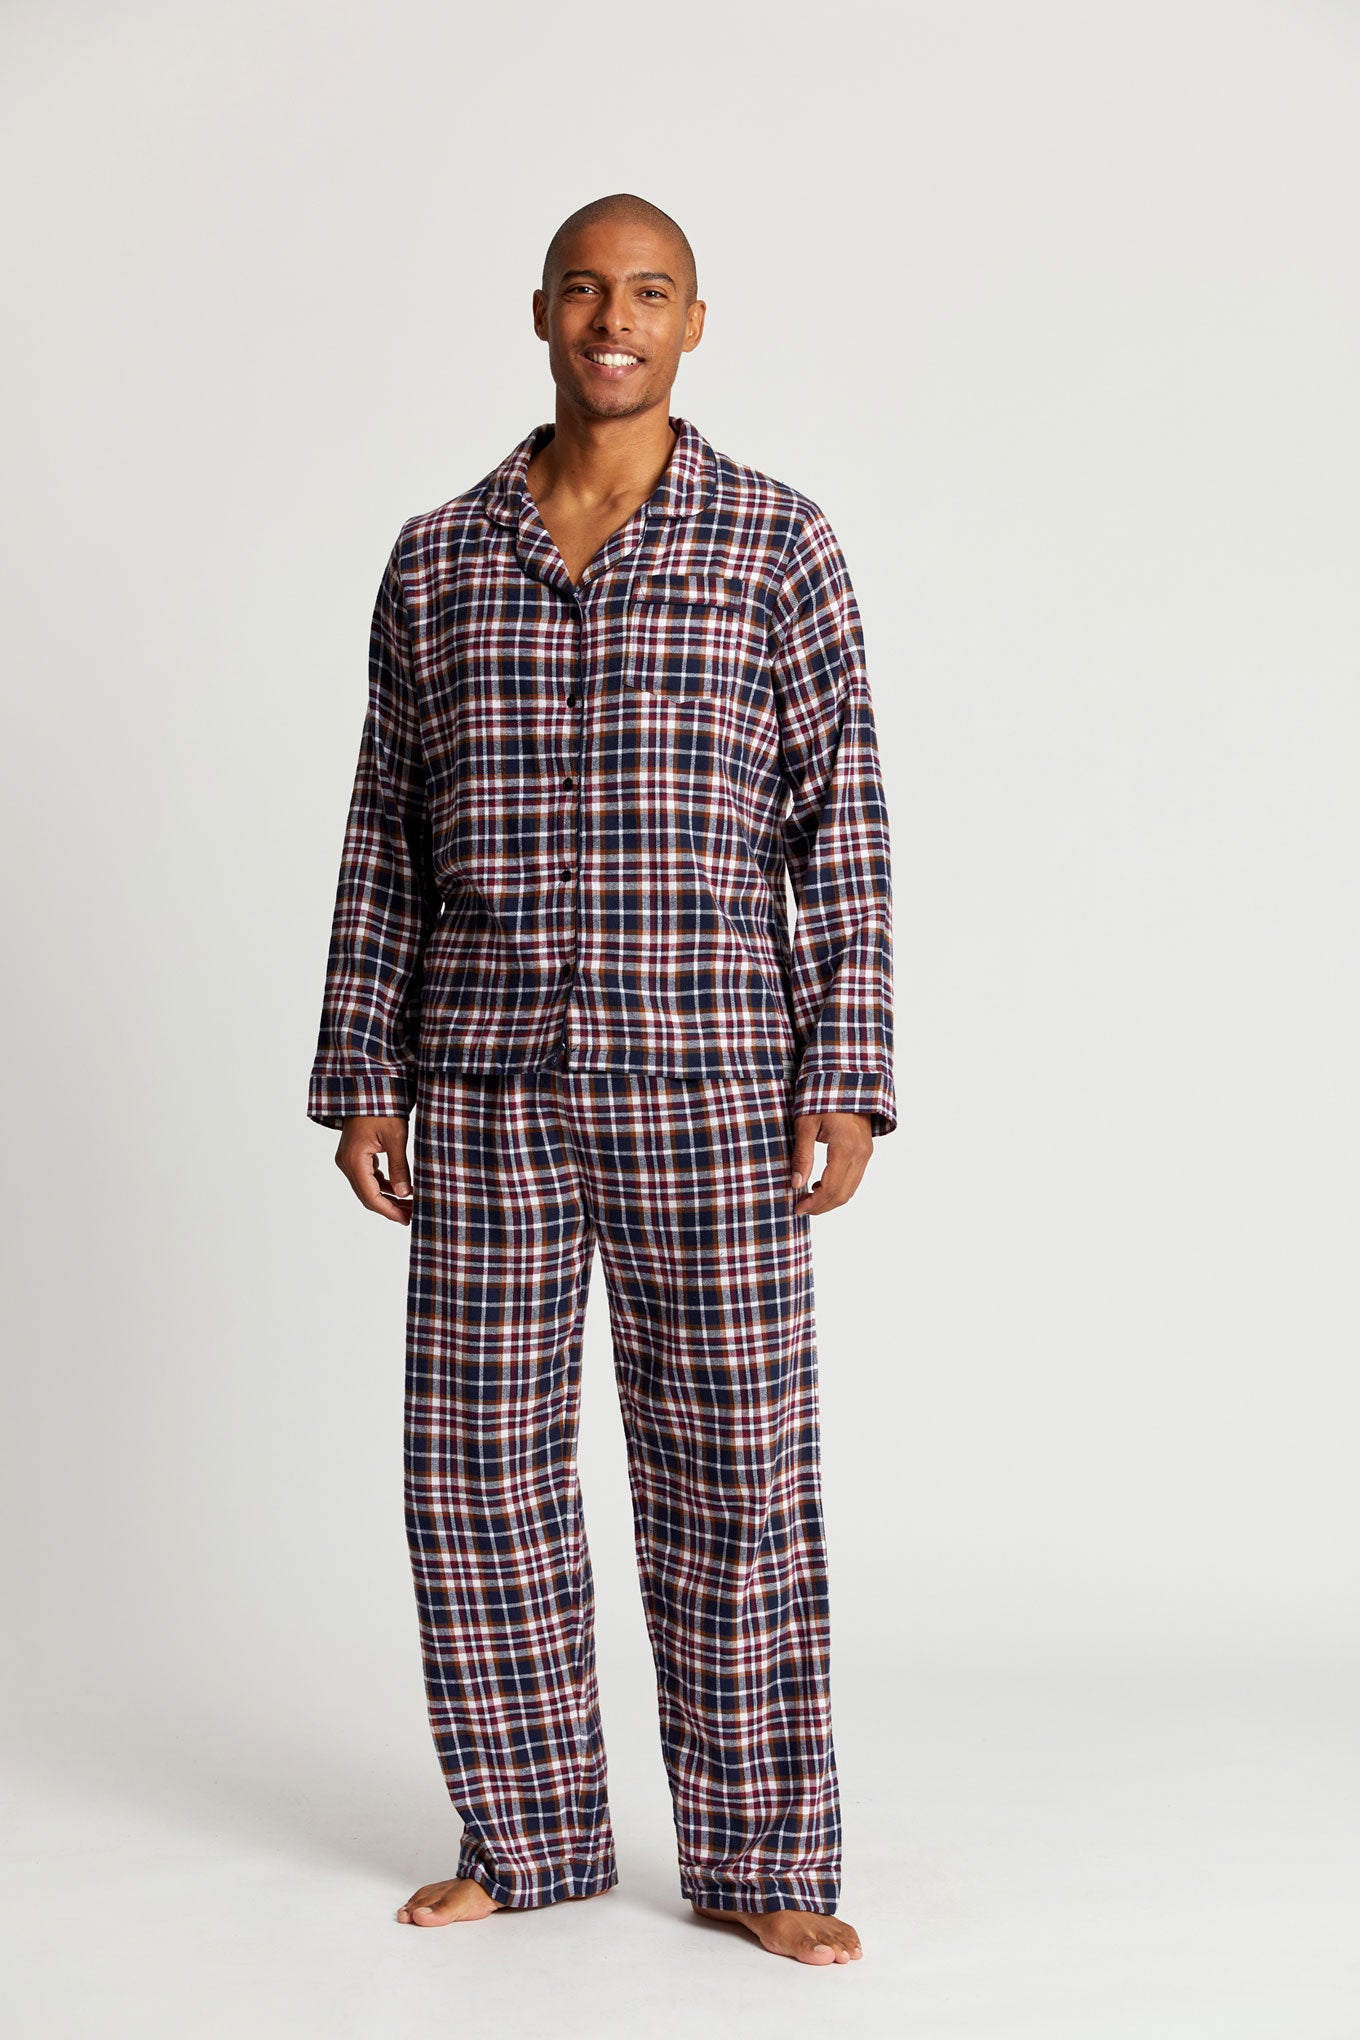 Organic Cotton Pyjamas - Komodo Fashion